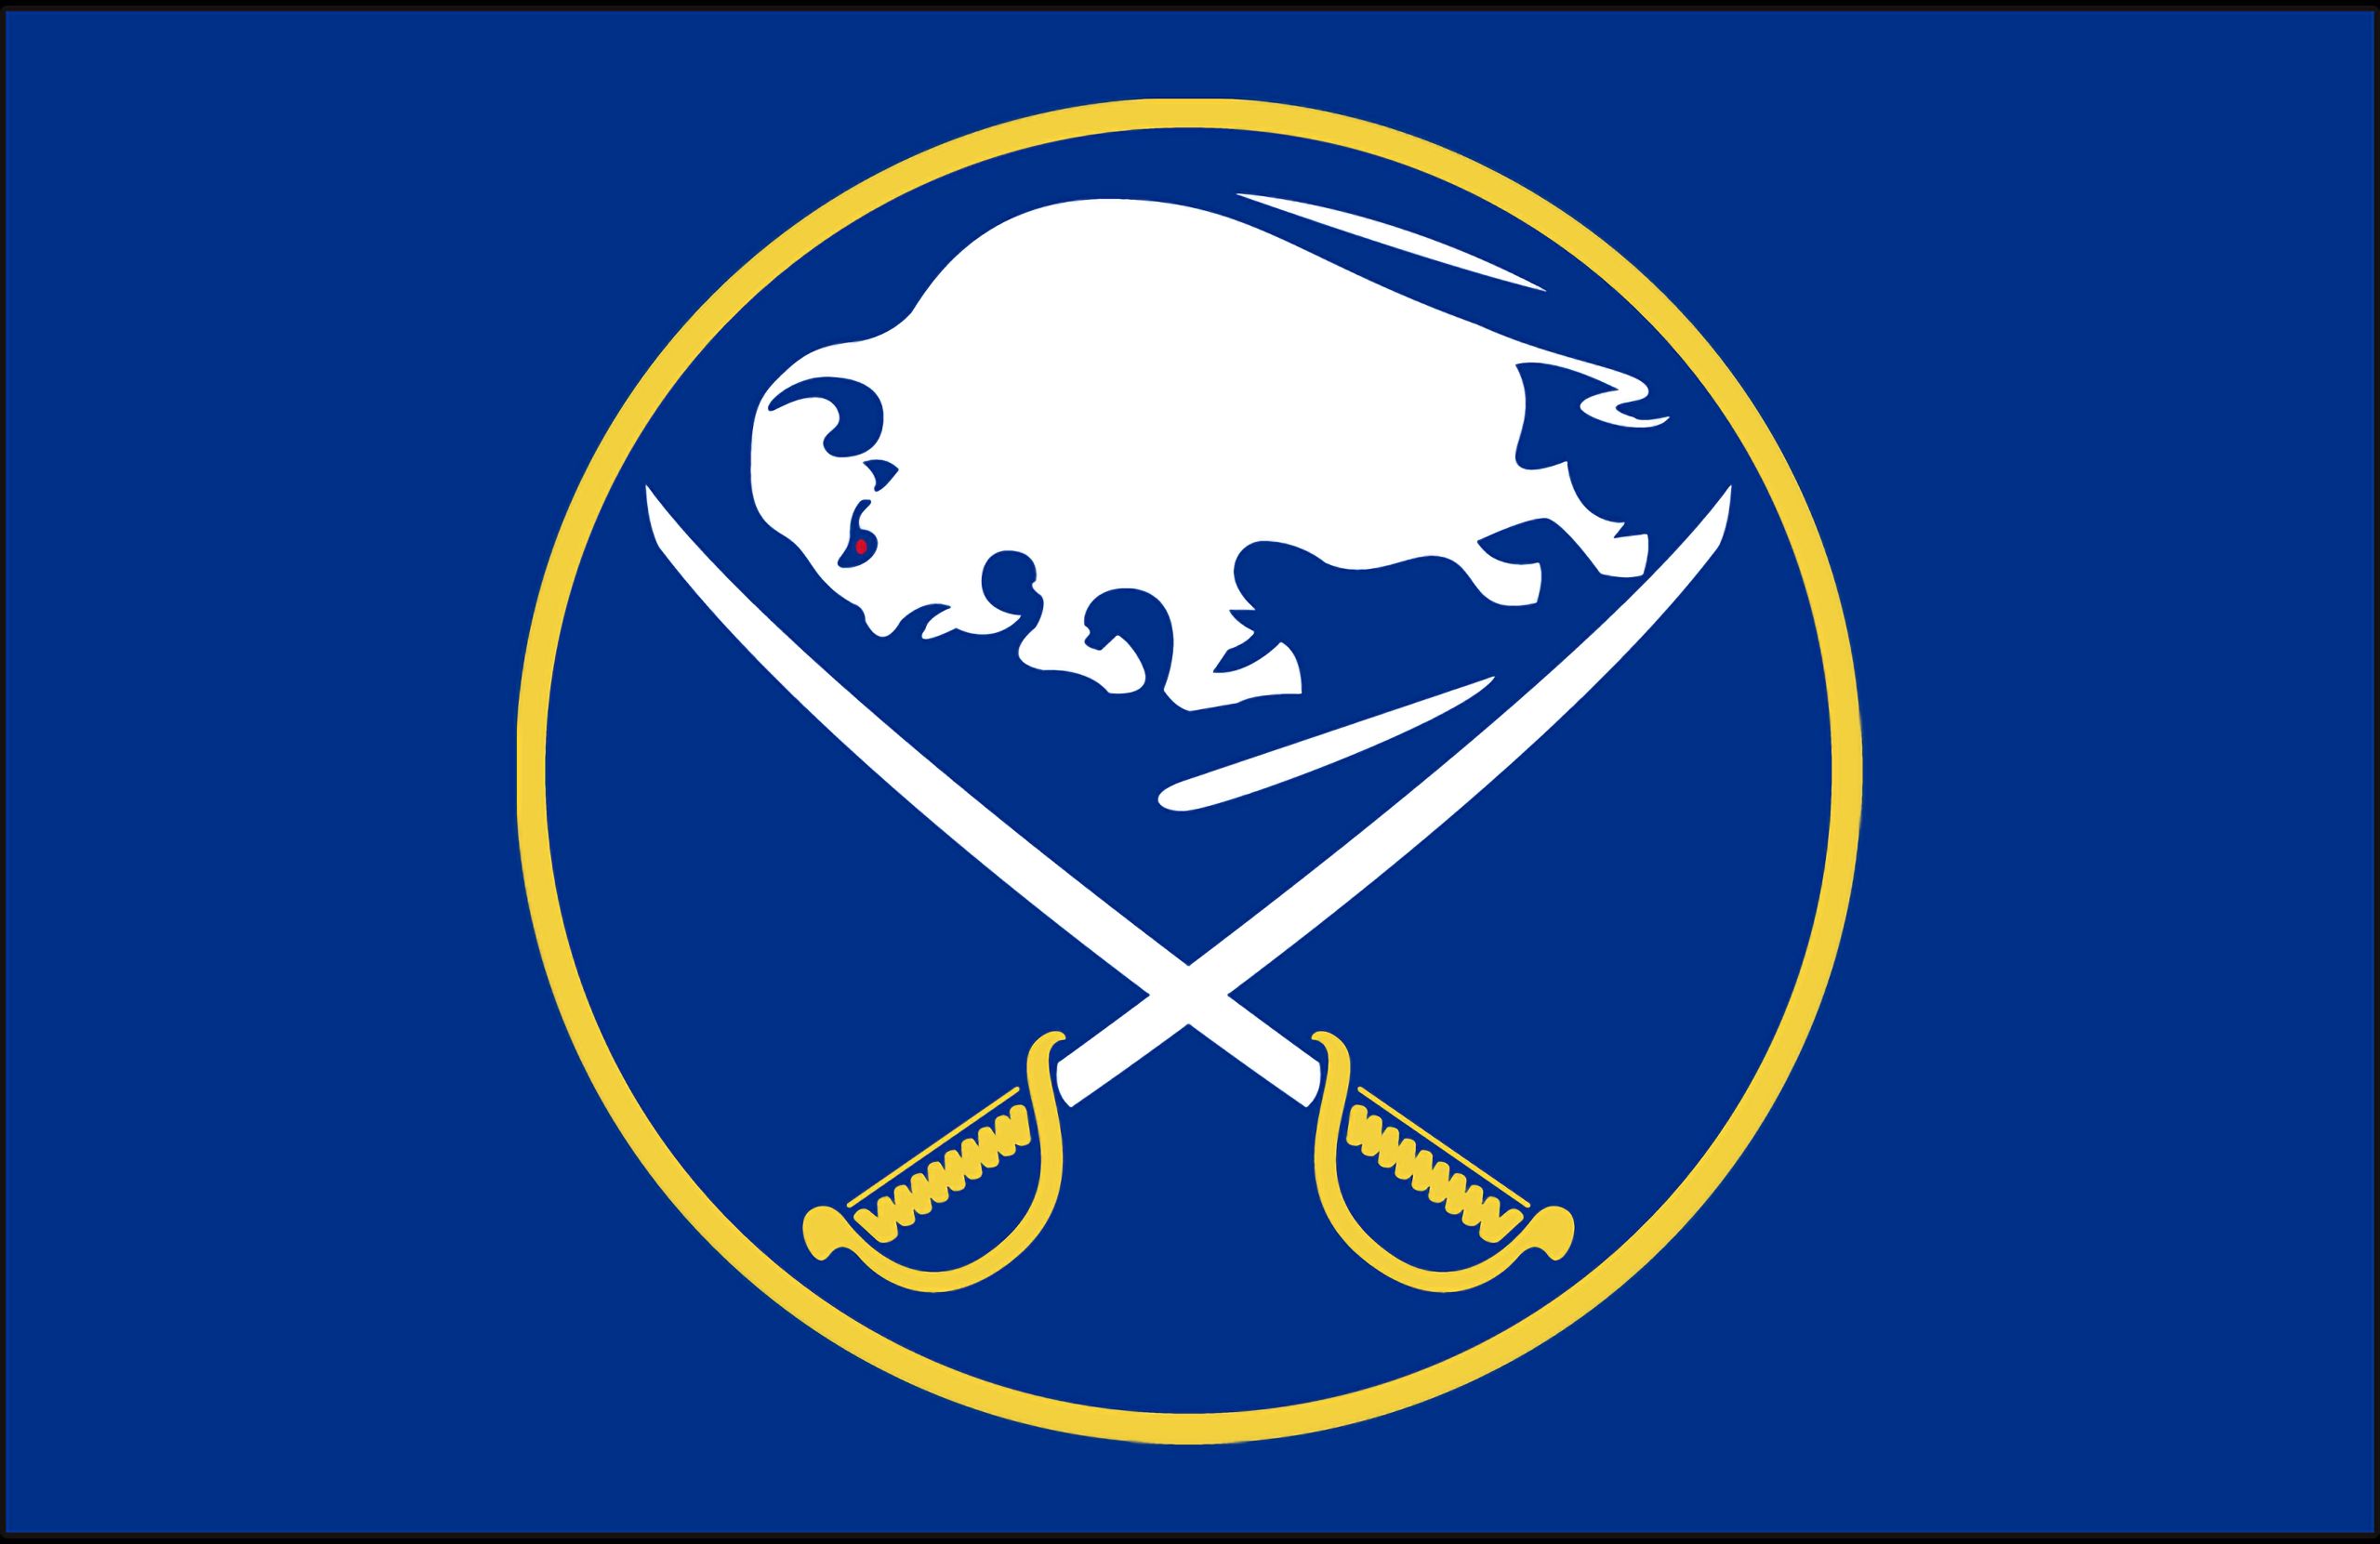 sports, buffalo sabres, hockey